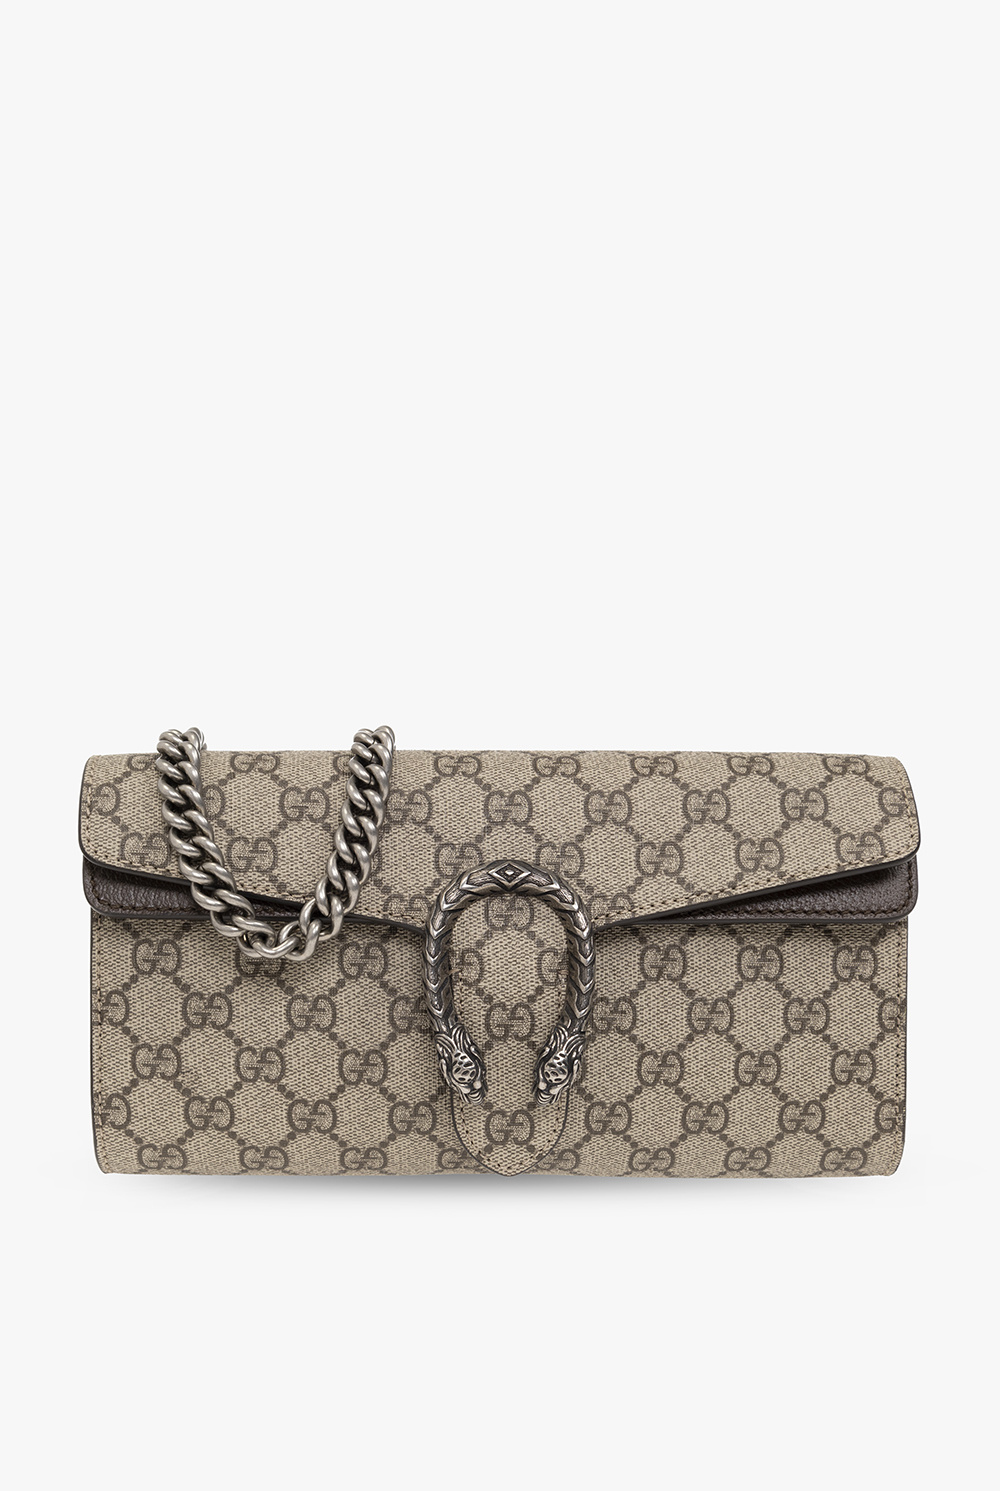 Gucci Dionysus Small 25cm GG Shoulder Bag